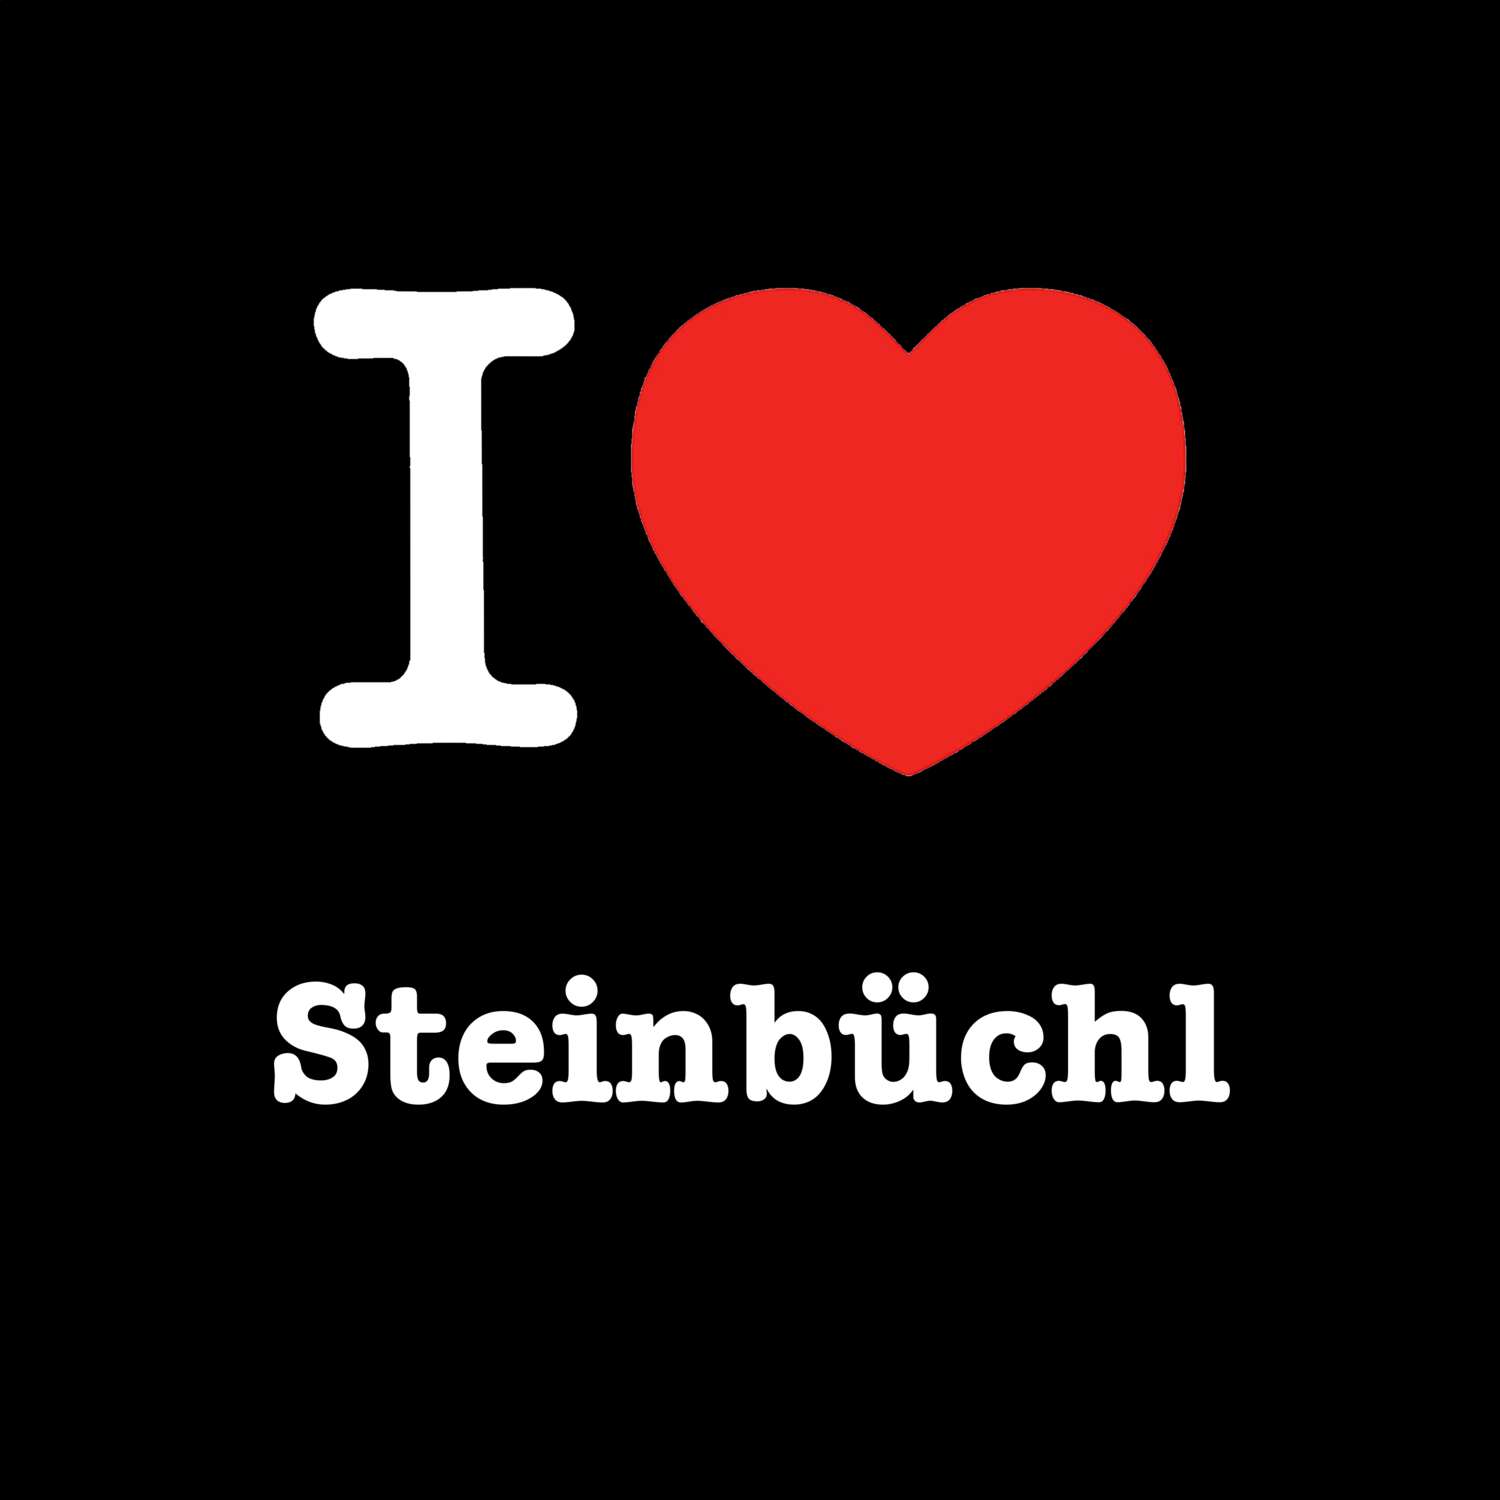 Steinbüchl T-Shirt »I love«